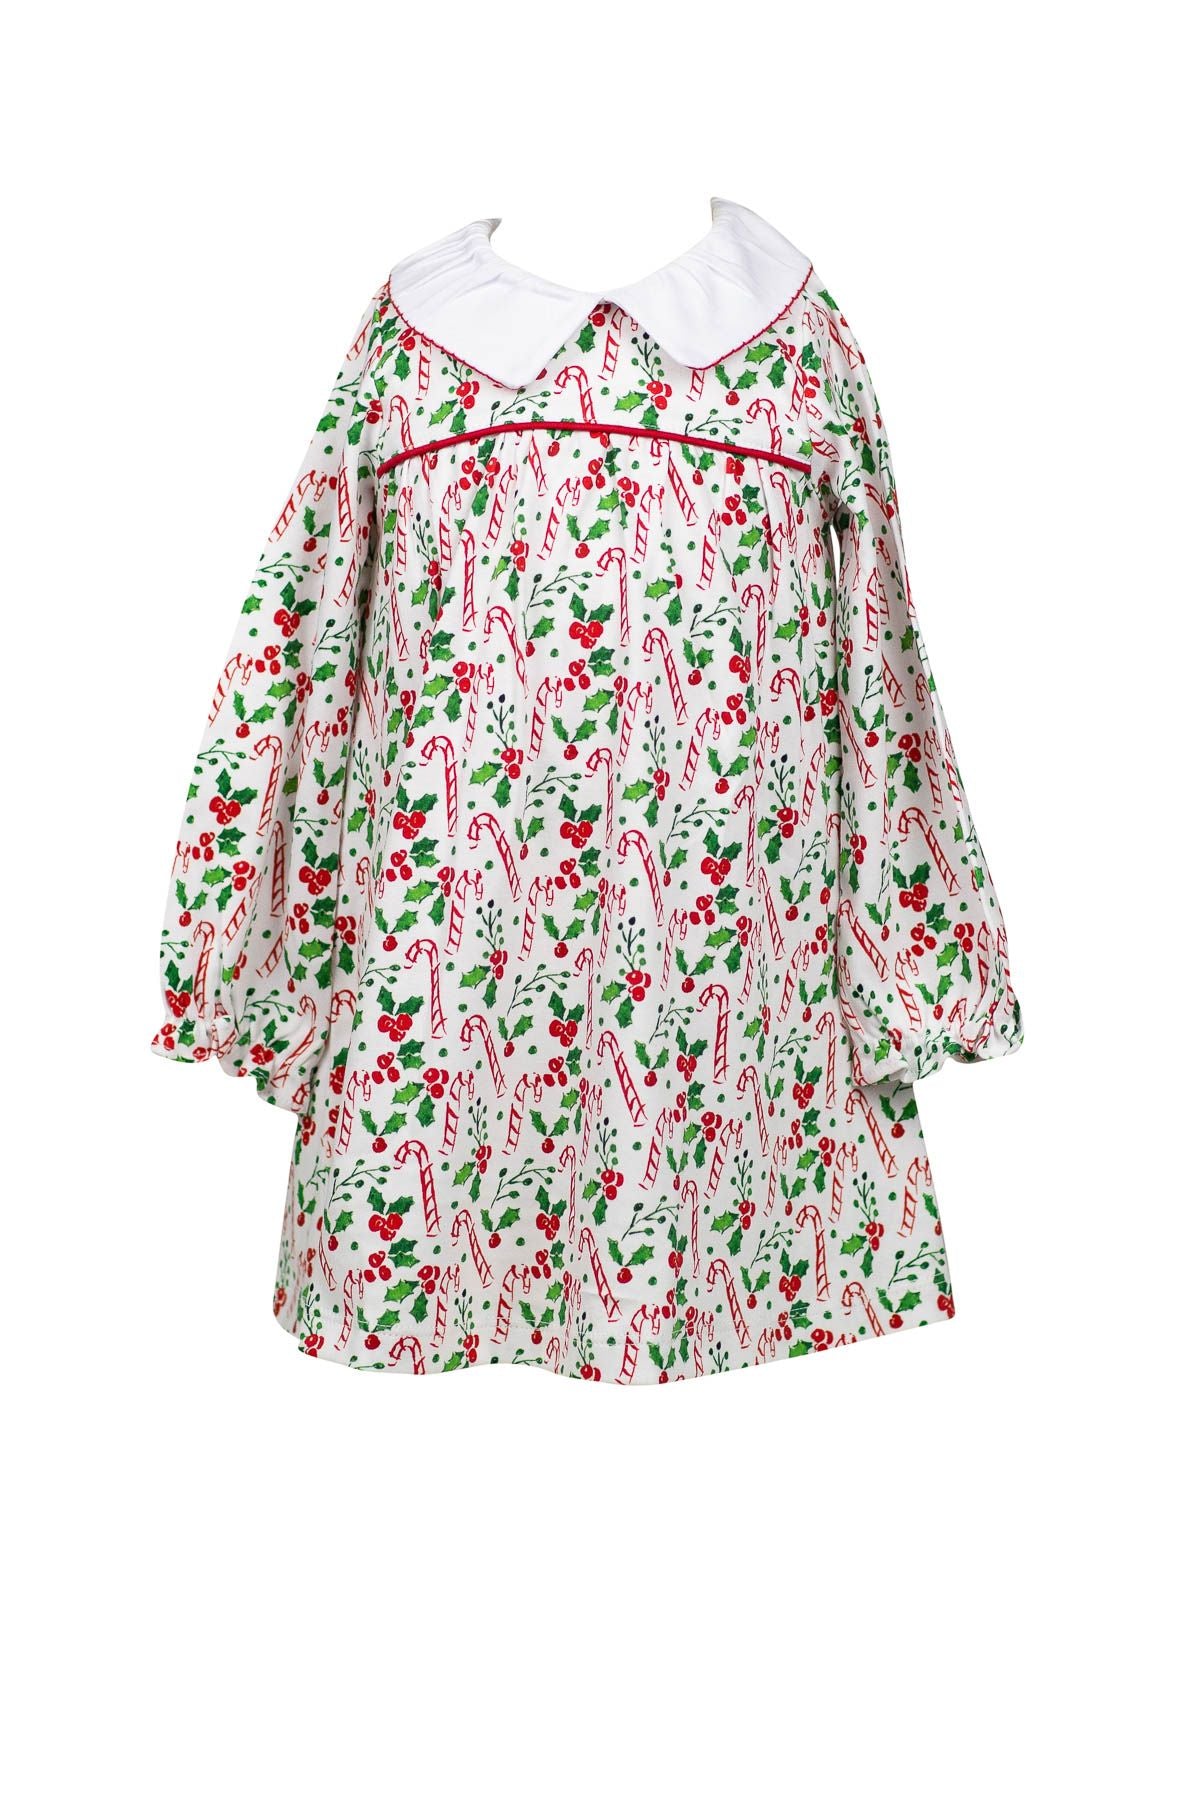 Proper Peony - Mistletoe Dress